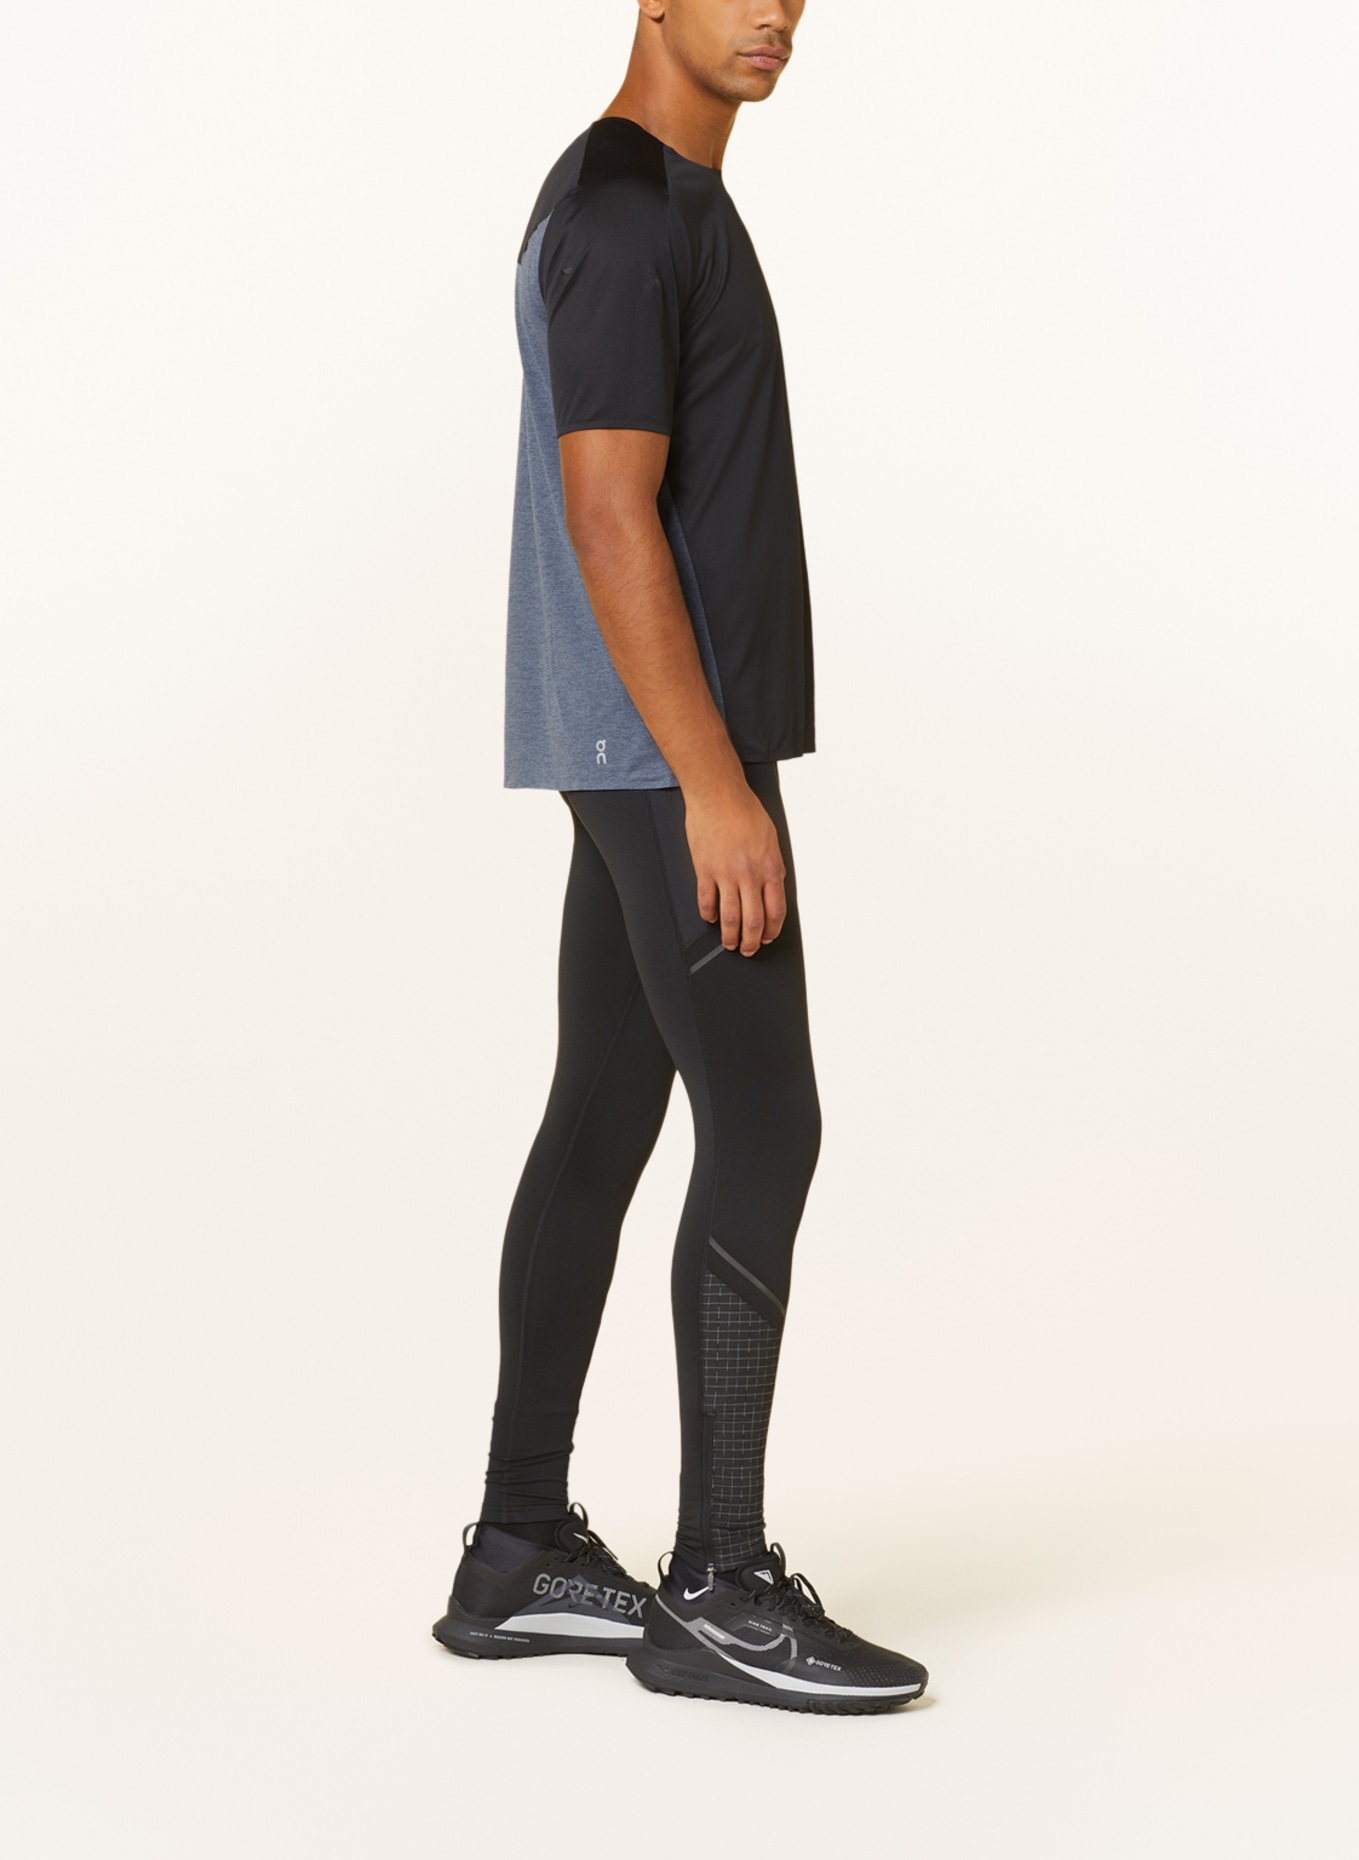 New Balance Impact Men's Running Tight - Black